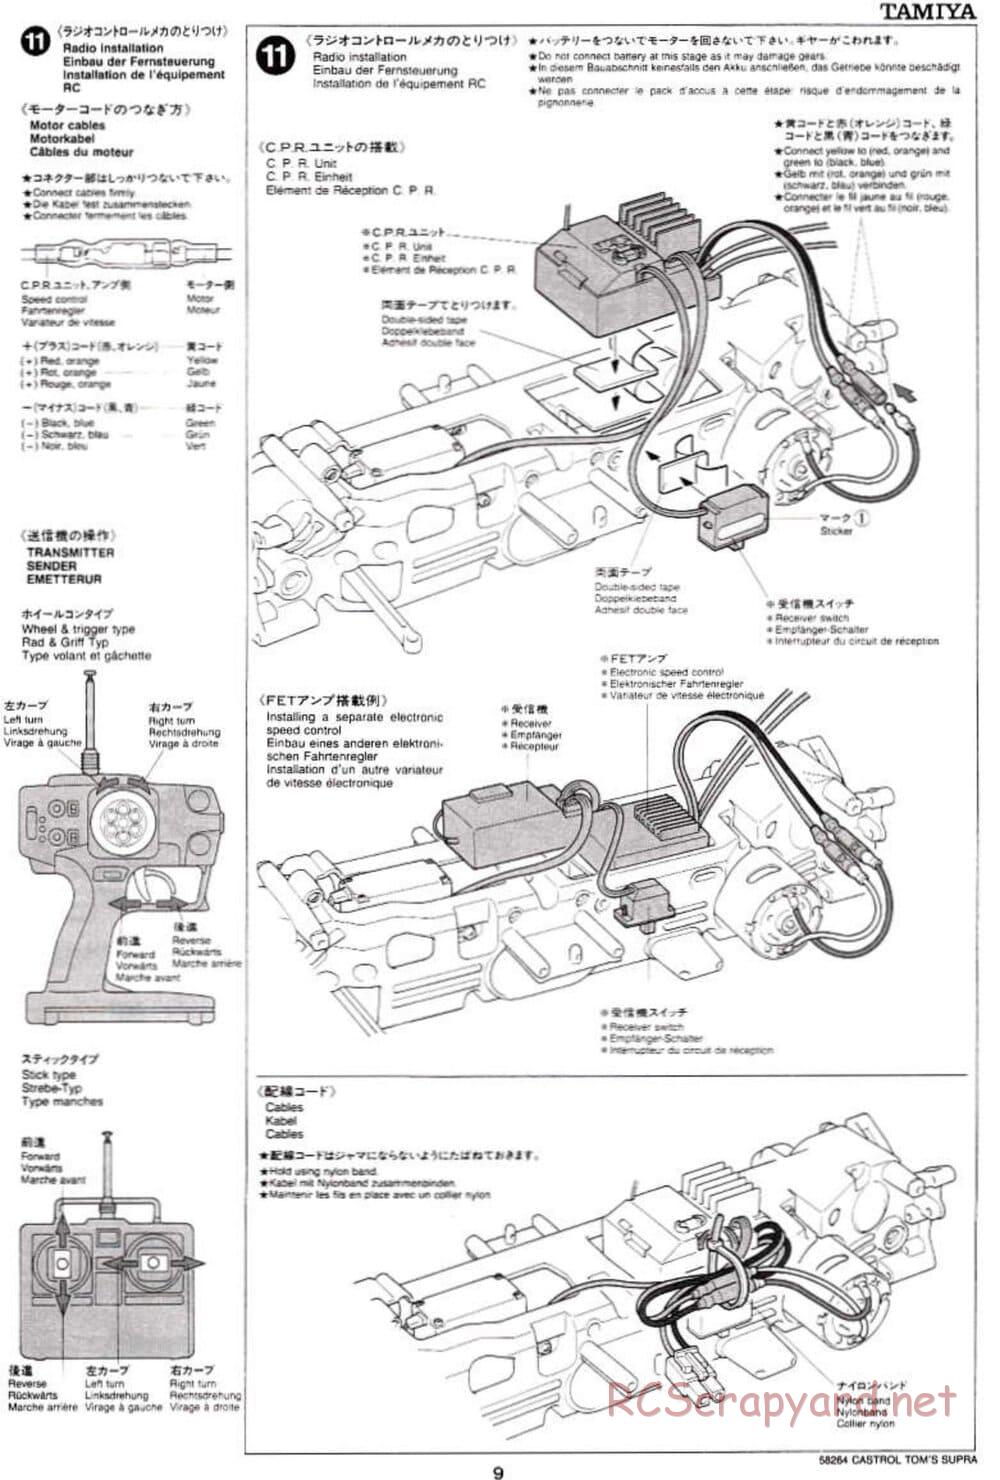 Tamiya - Castrol Tom's Supra 2000 - TL-01 Chassis - Manual - Page 9